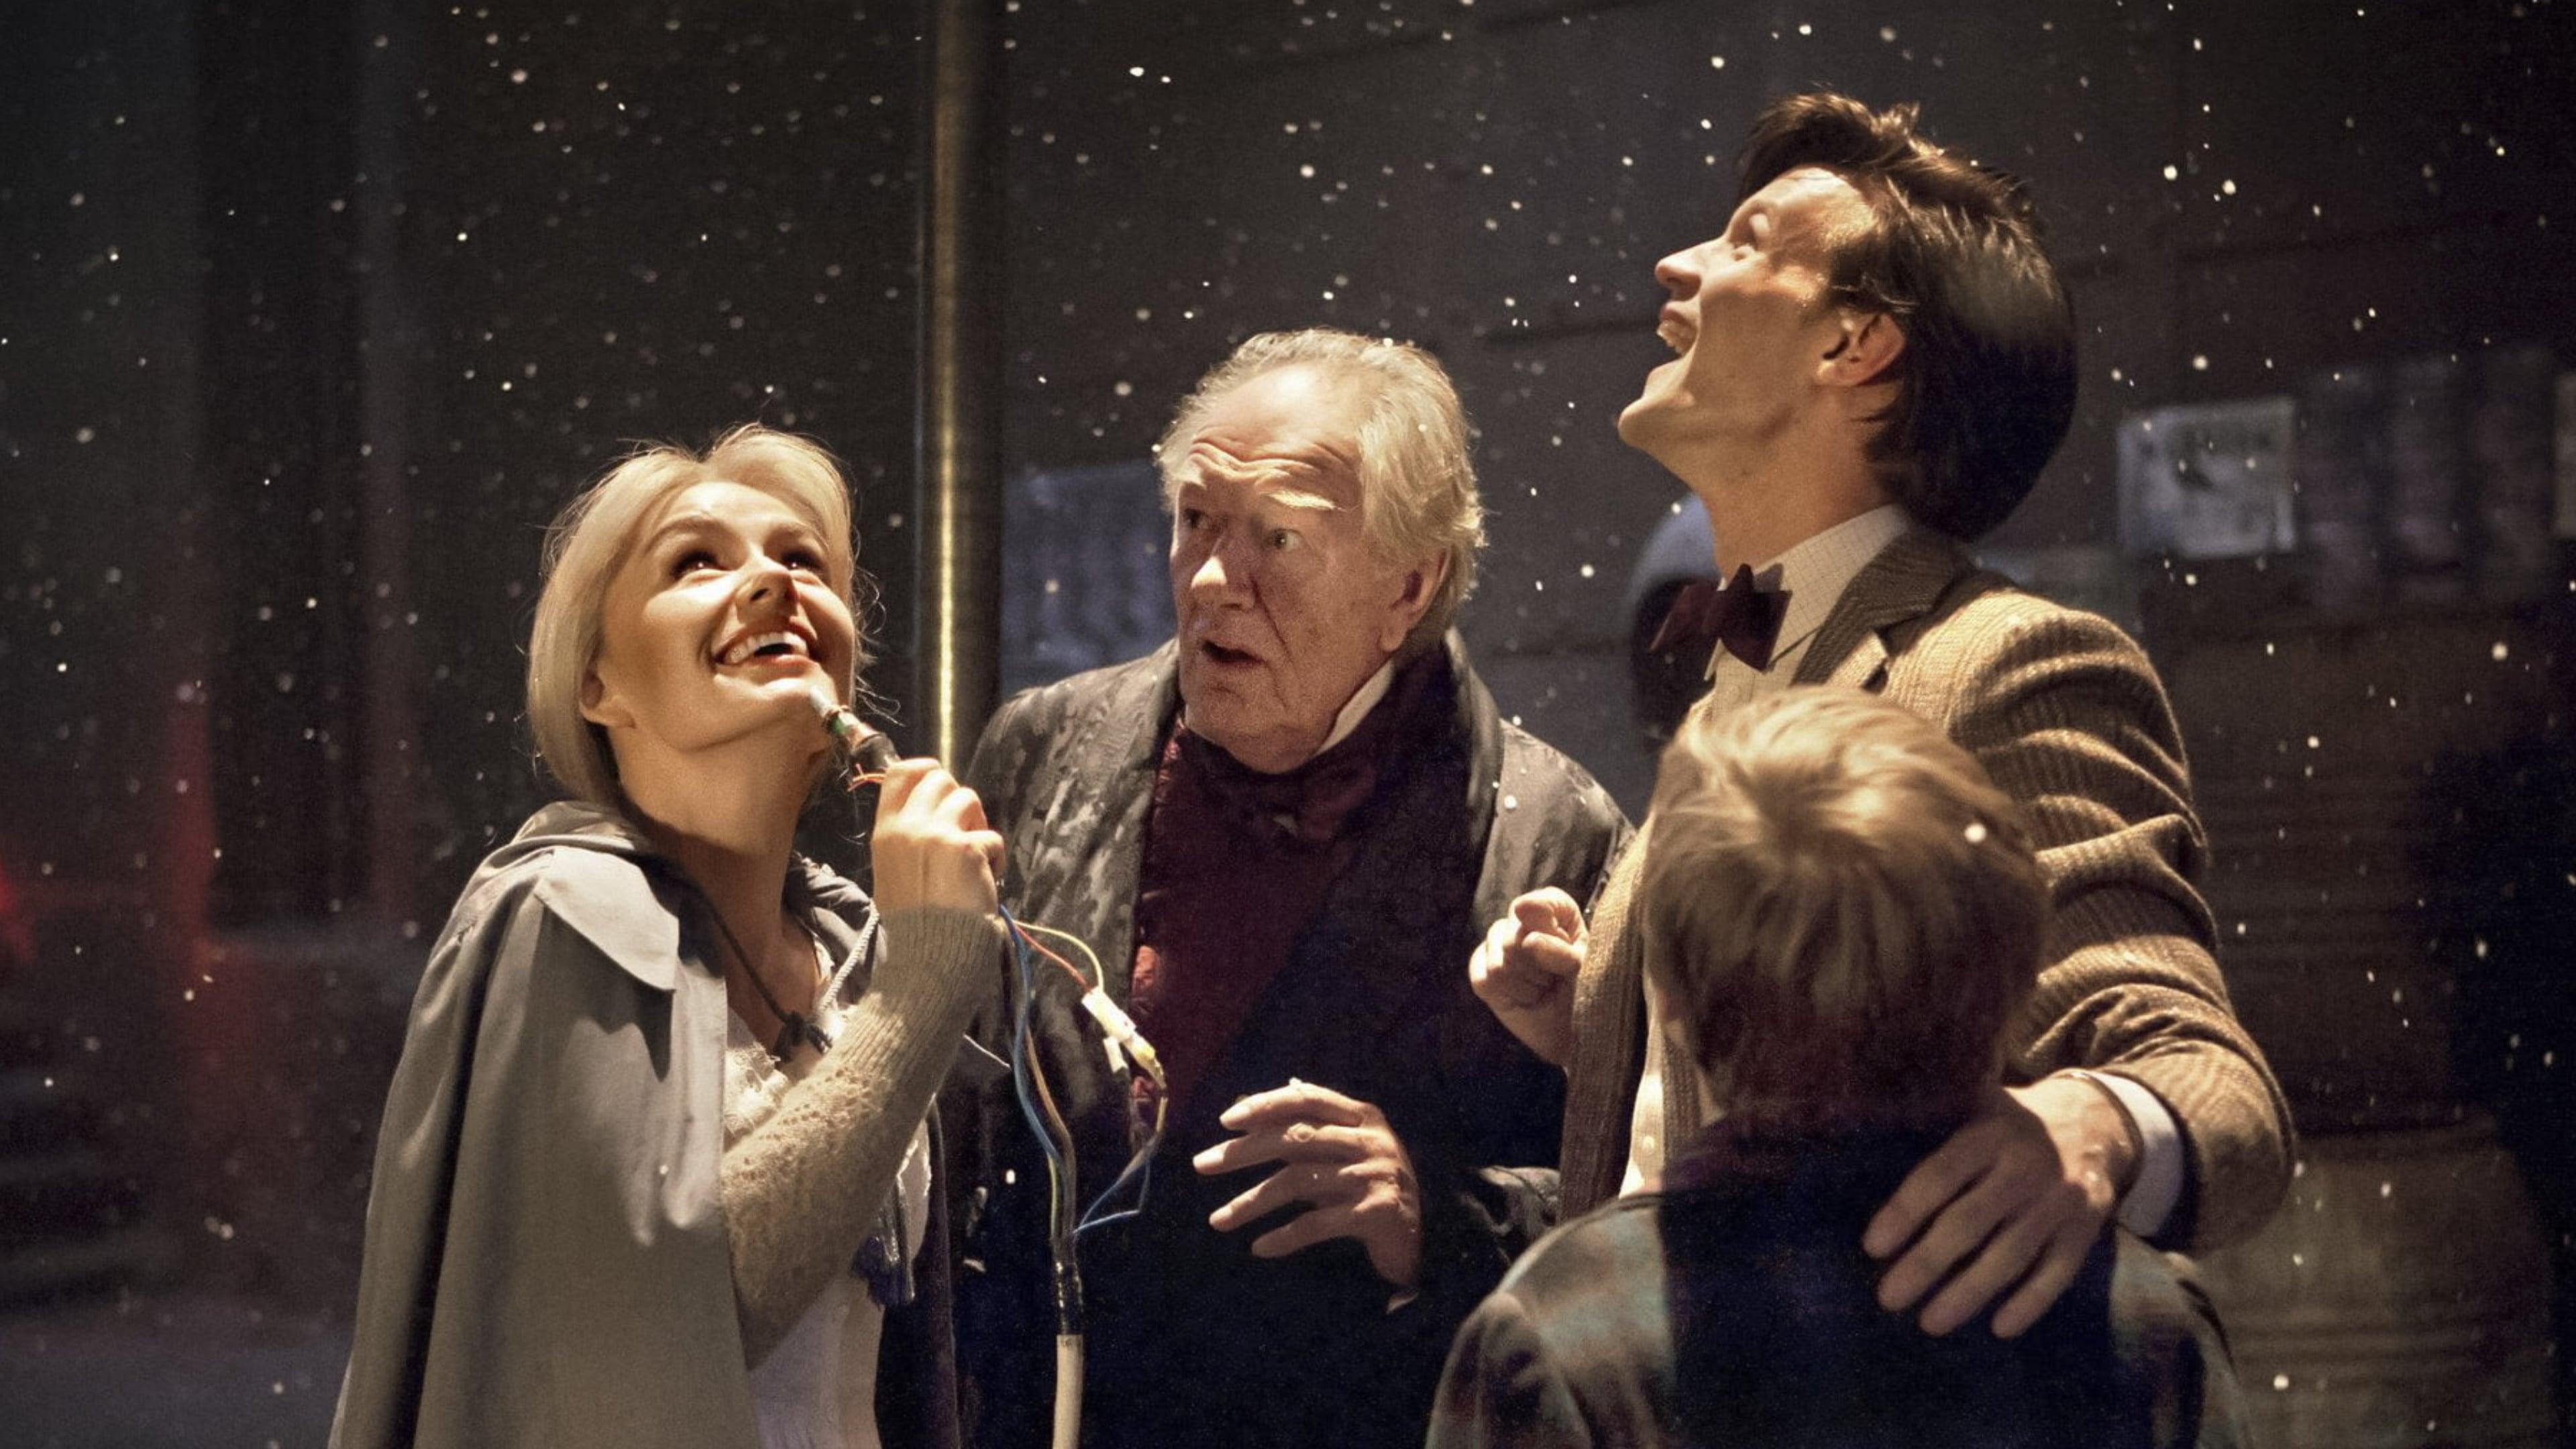 Doctor Who: A Christmas Carol backdrop